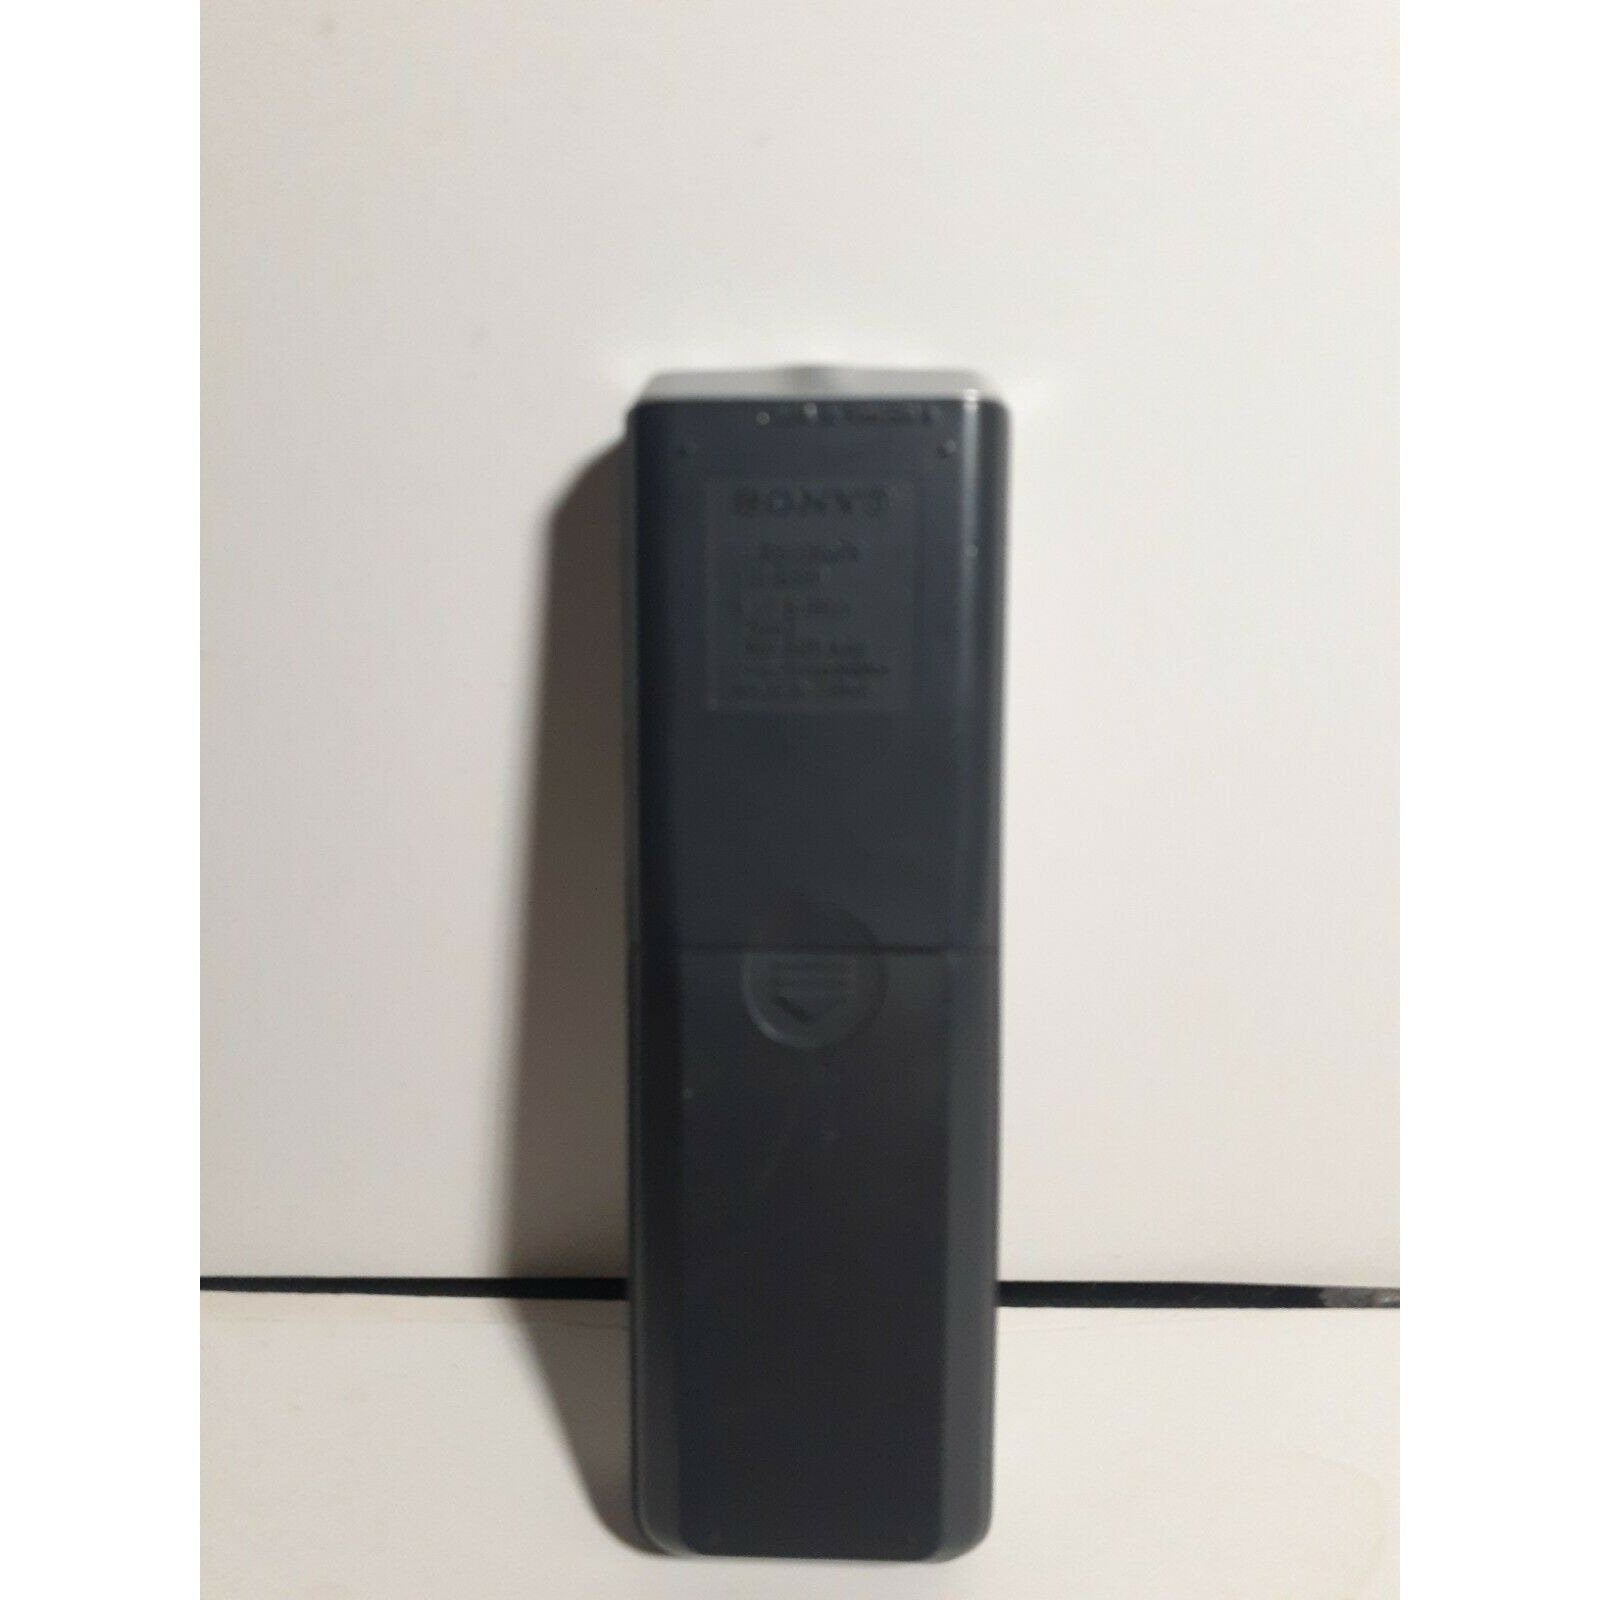 Sony ICD-B300 Handheld Digital Voice Recorder